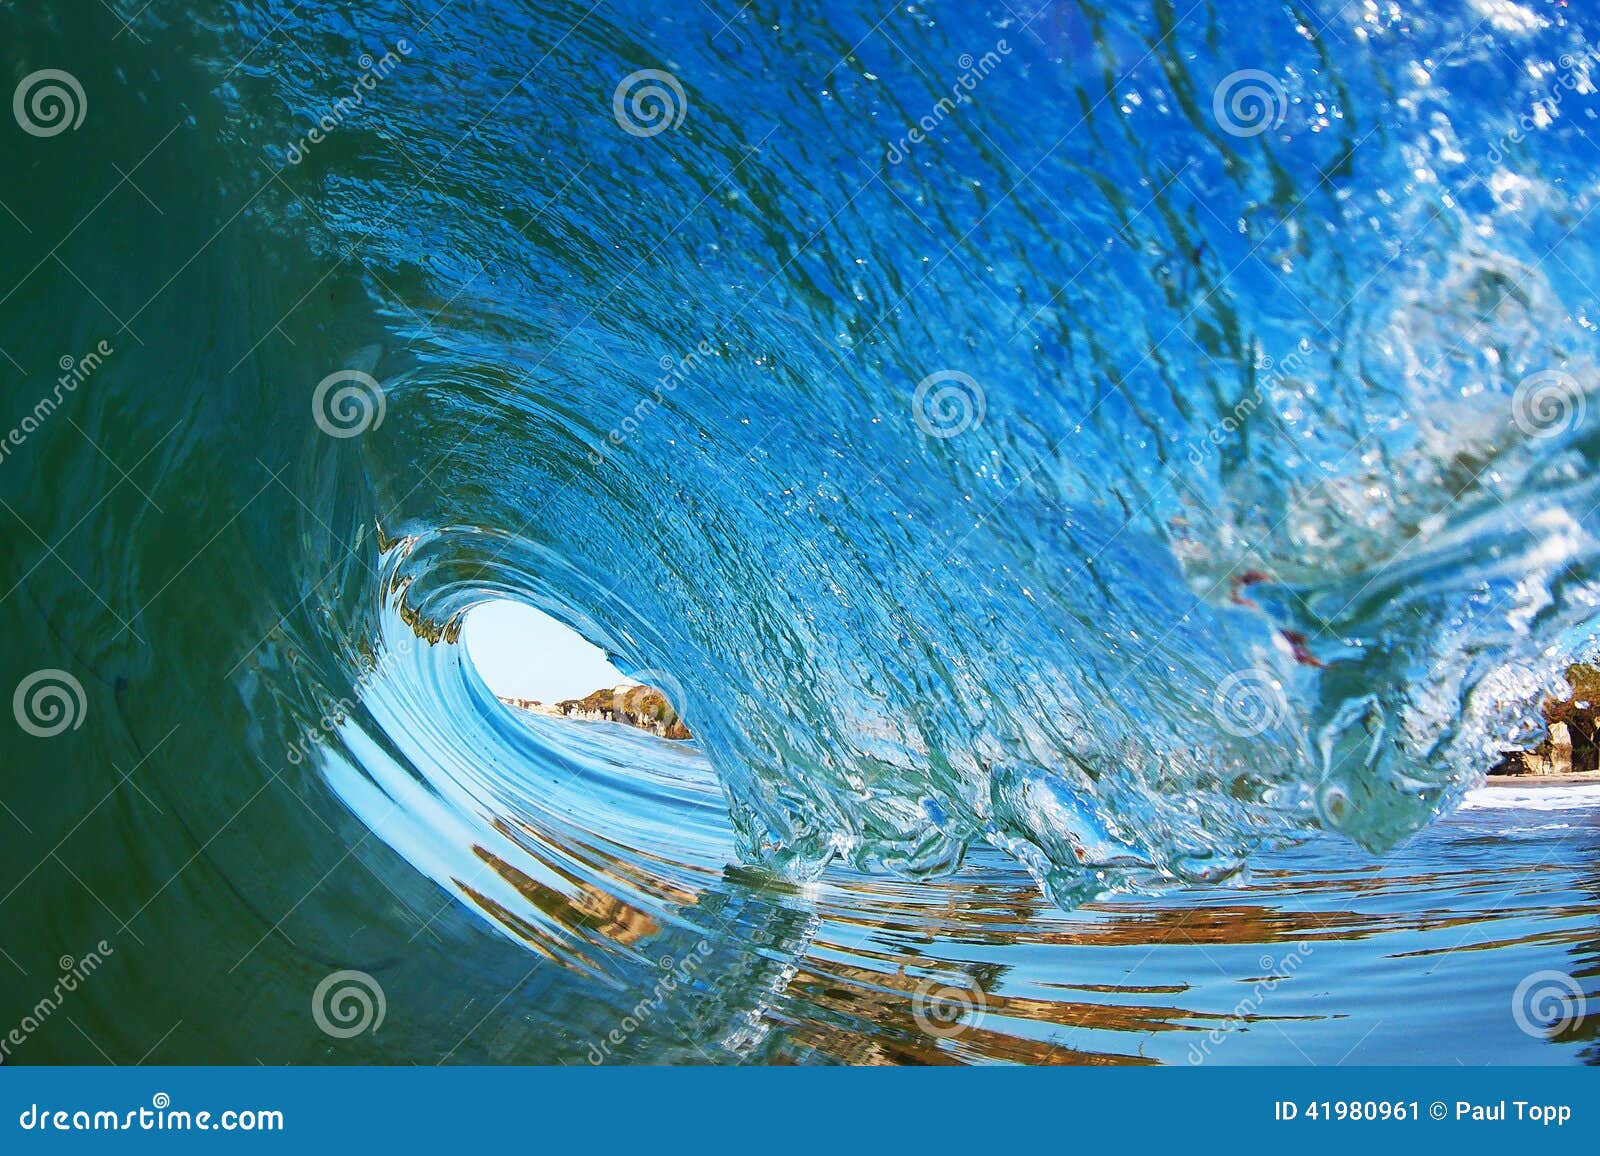 tubular surfing wave breaking near the shore in california